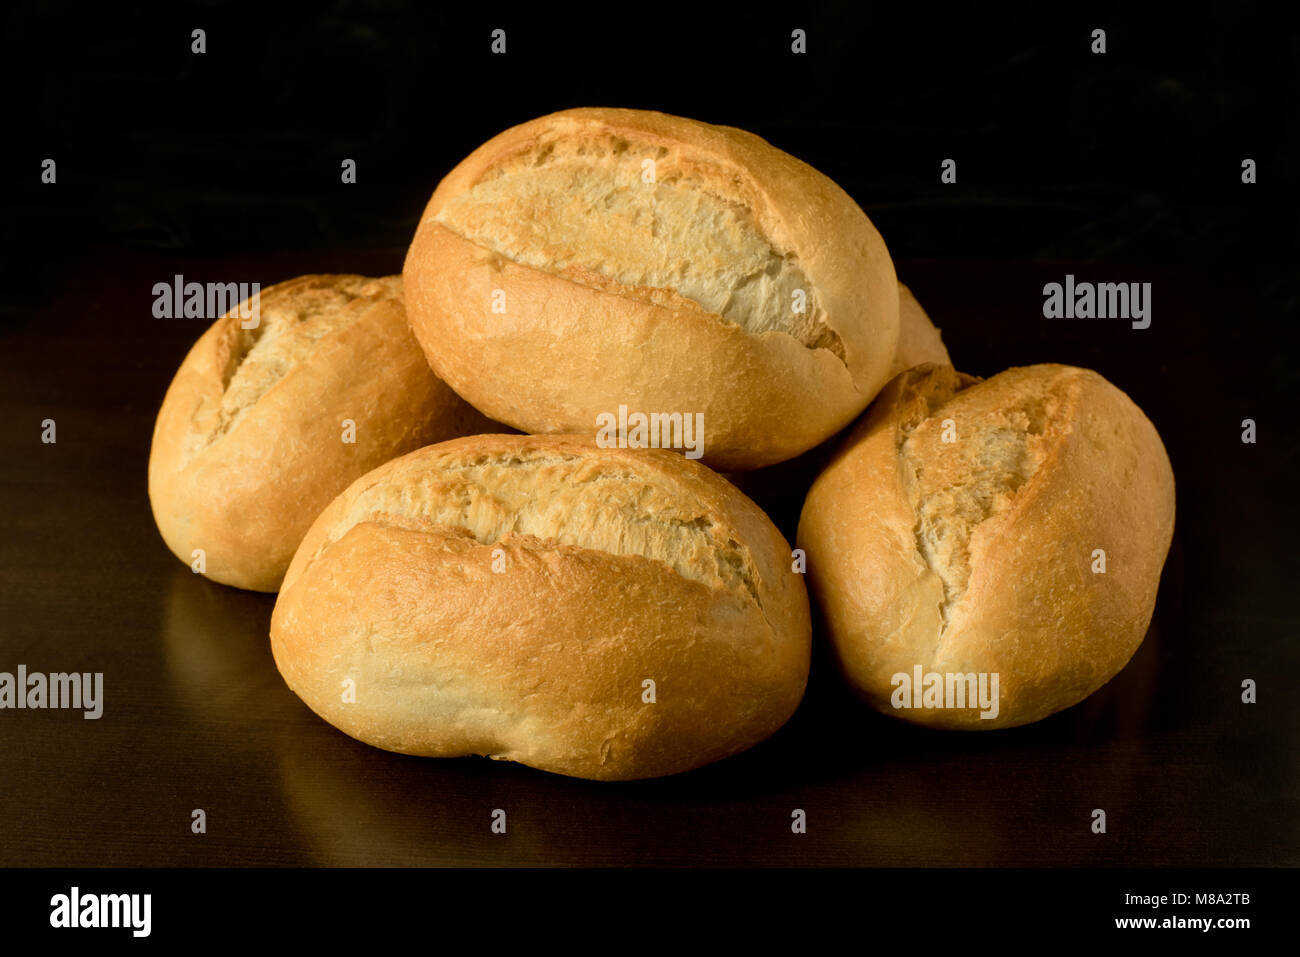 Small bread rolls, brštchen - breakfast rolls - traditional german rolls -  on dark background Stock Photo - Alamy